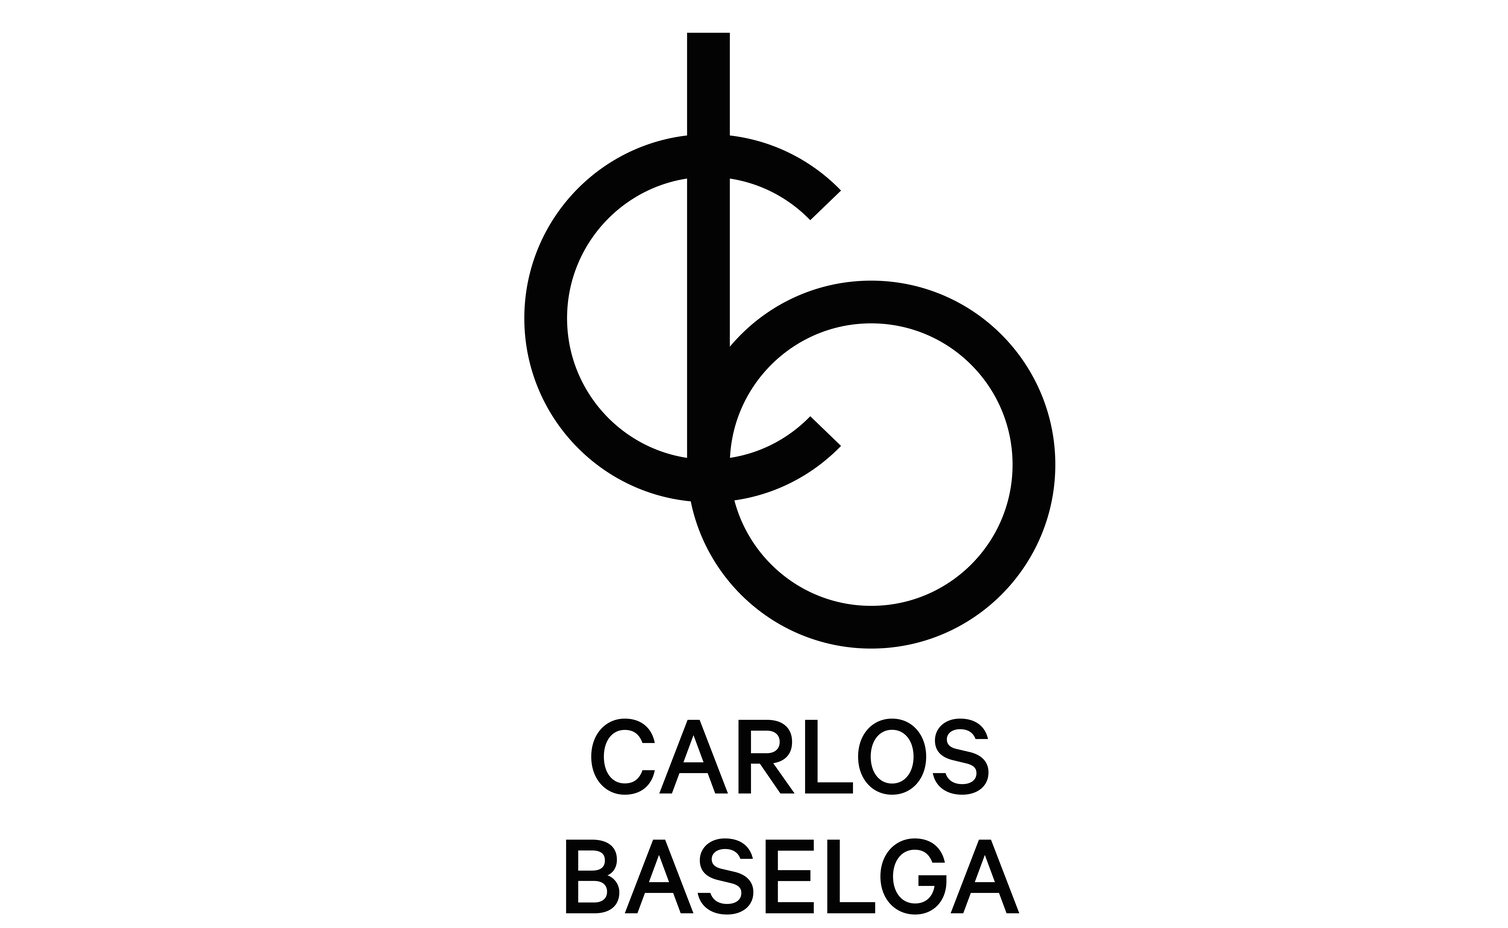 CARLOS BASELGA